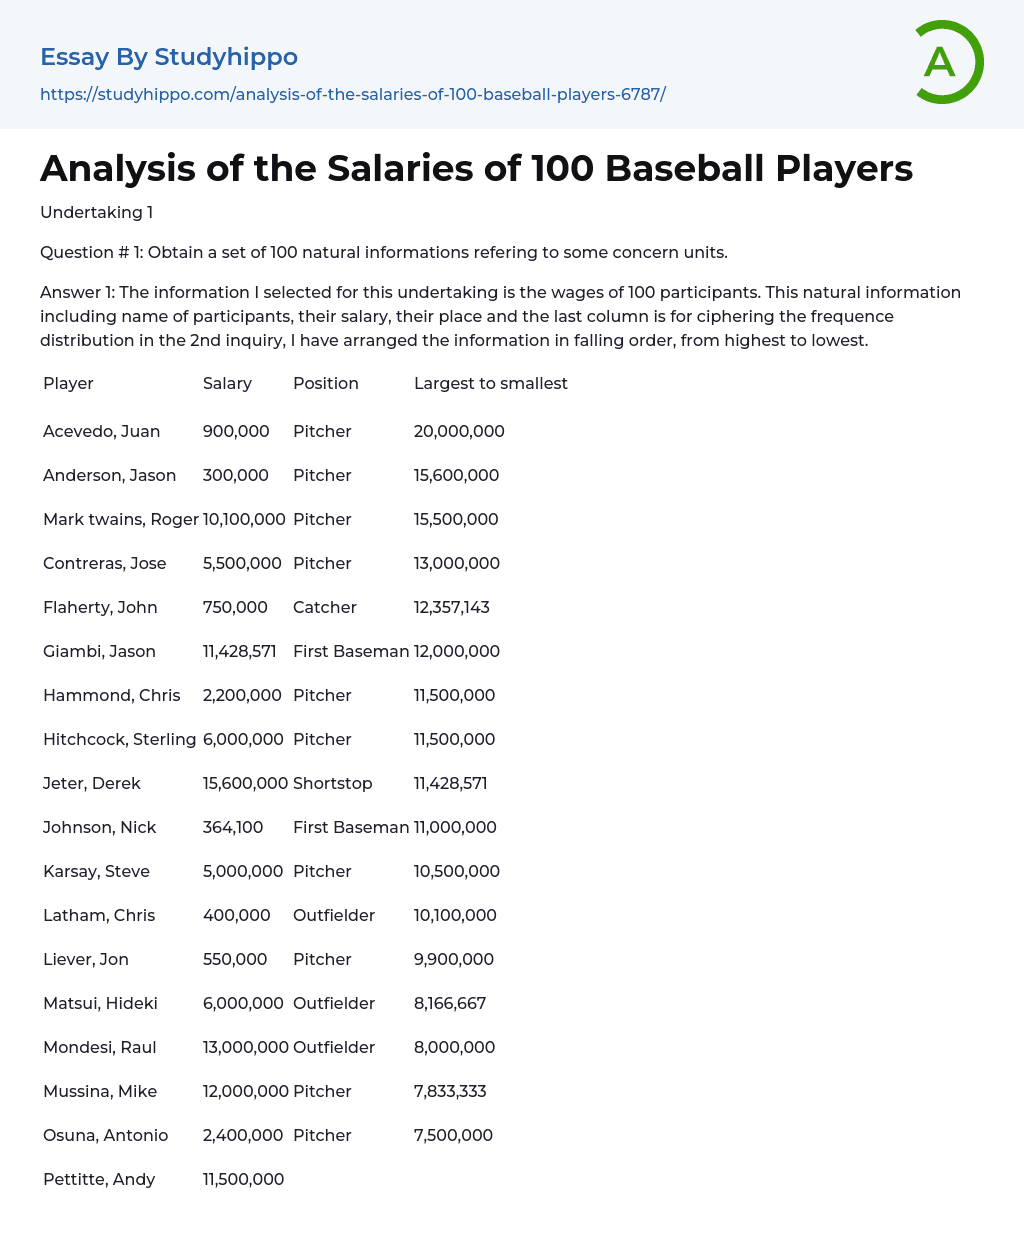 Analysis of the Salaries of 100 Baseball Players